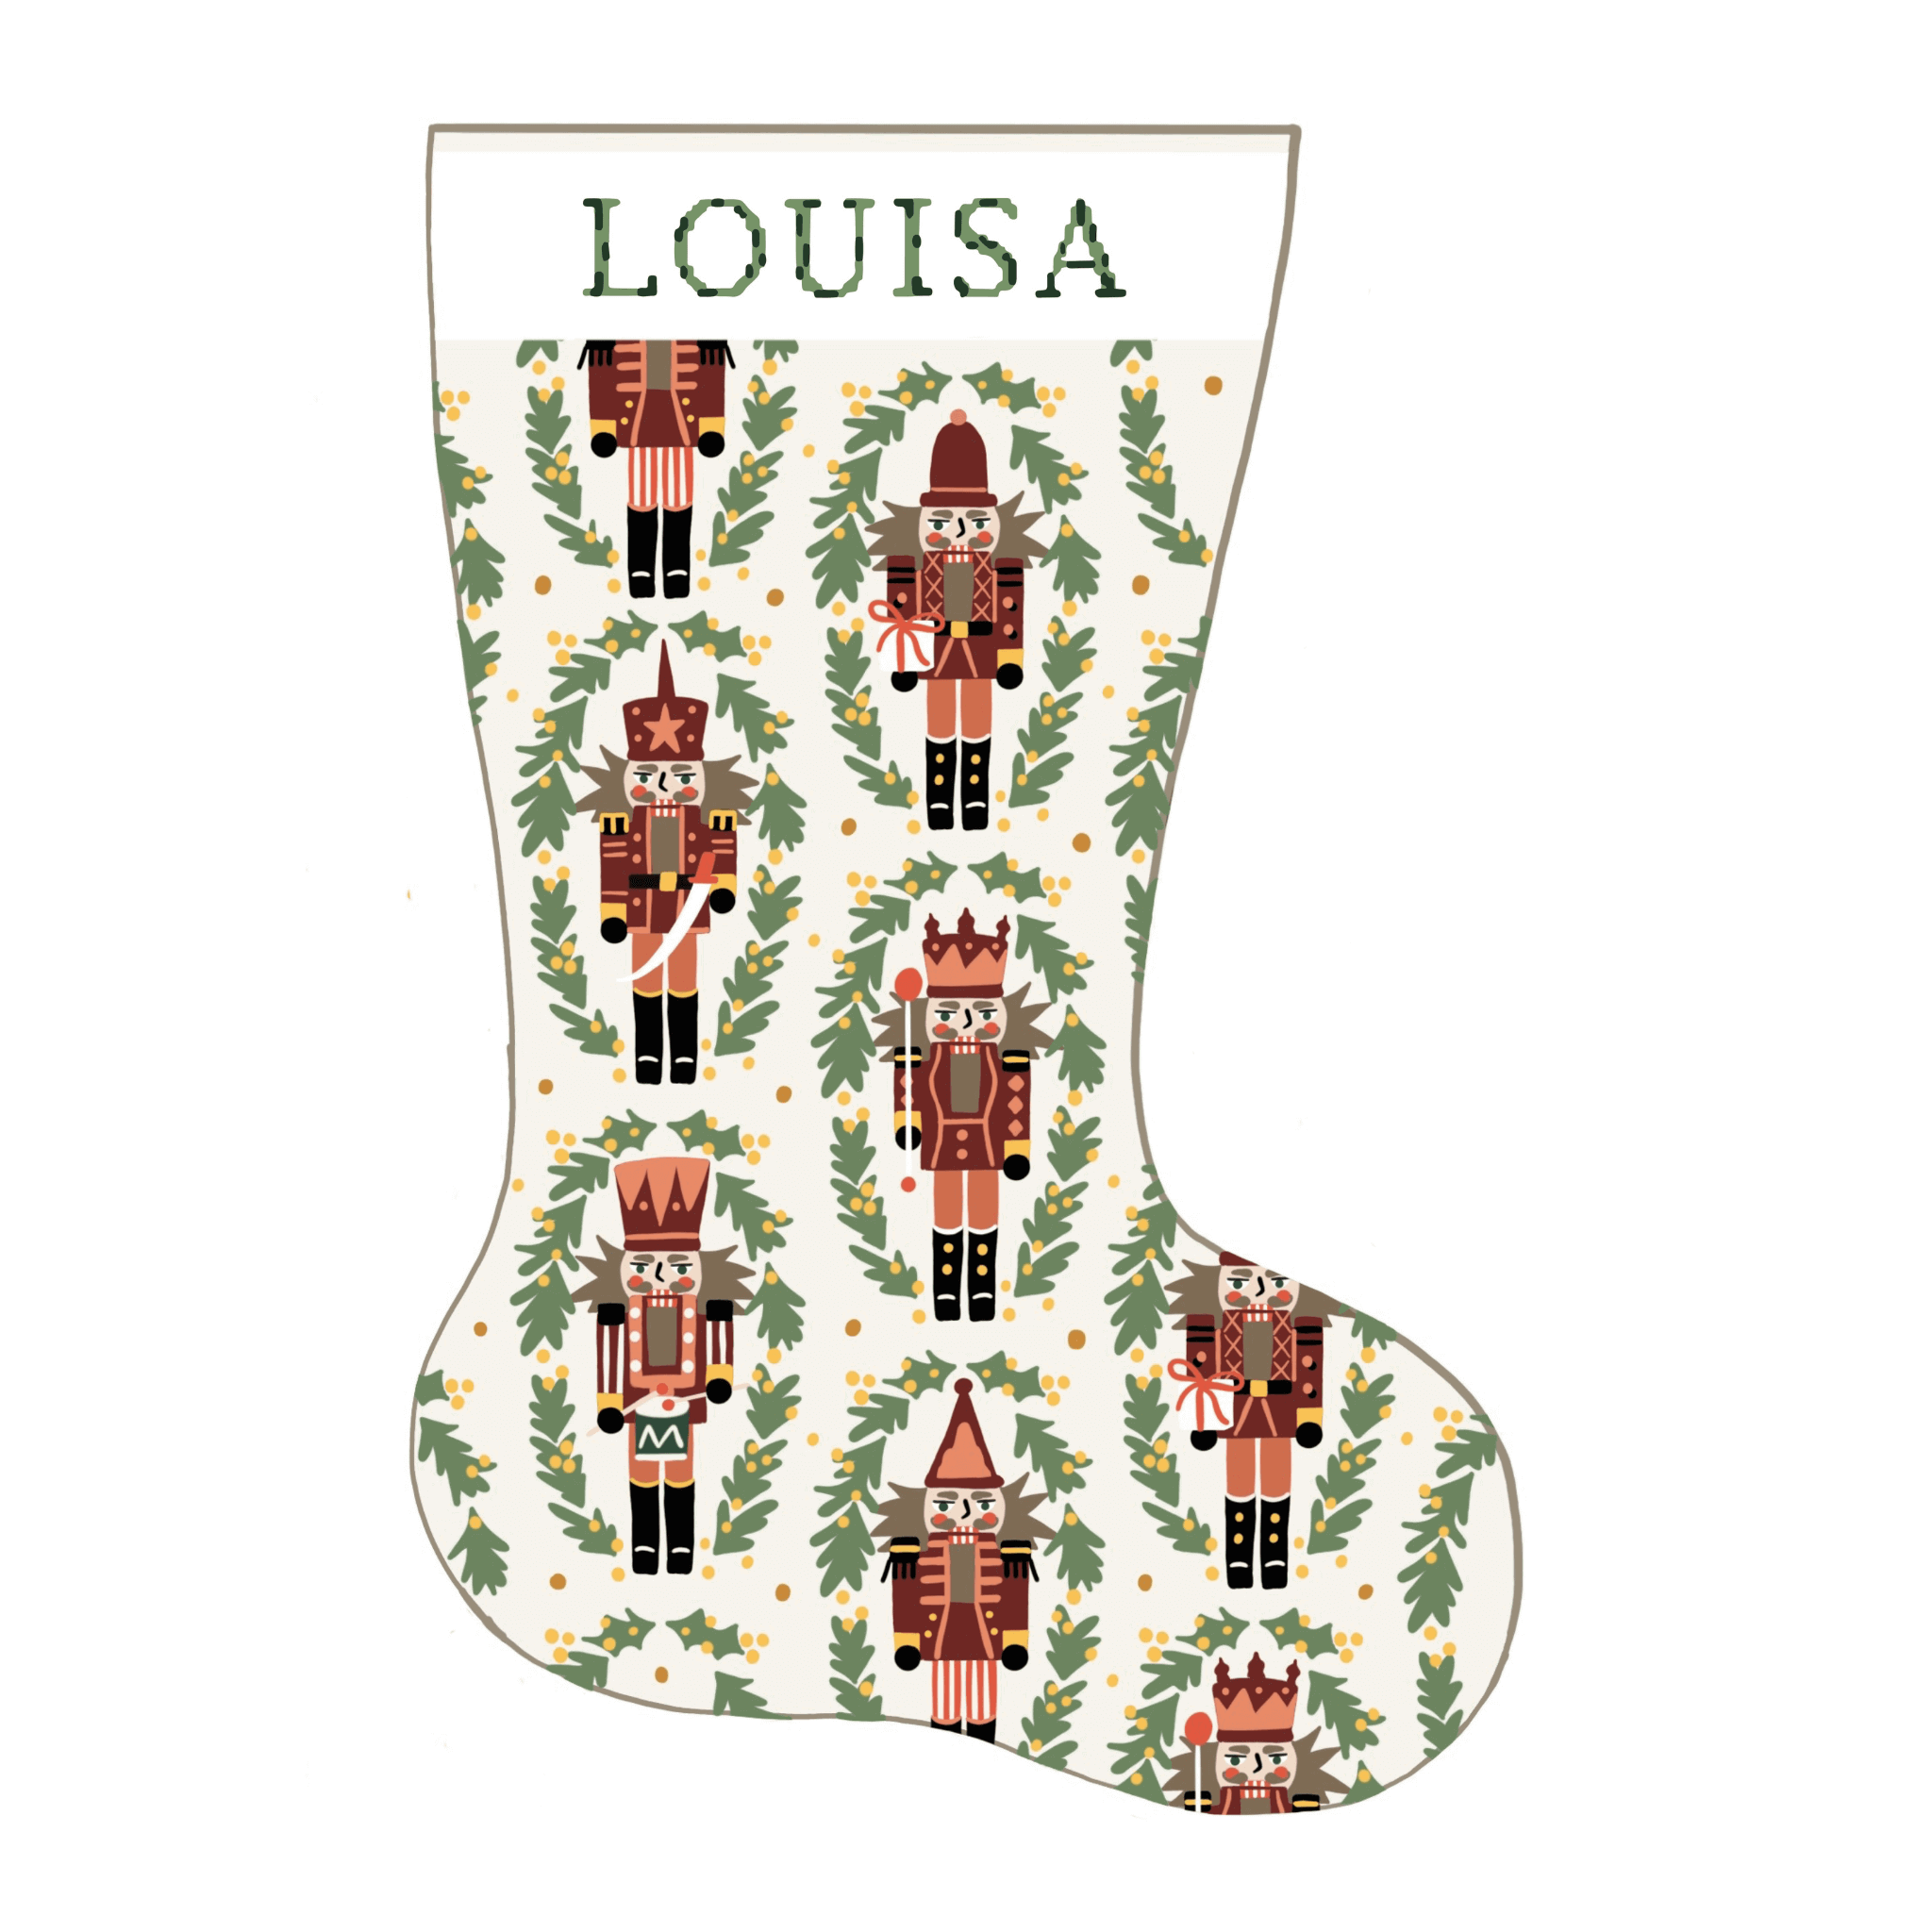 louis vuitton stockings - Buy louis vuitton stockings with free